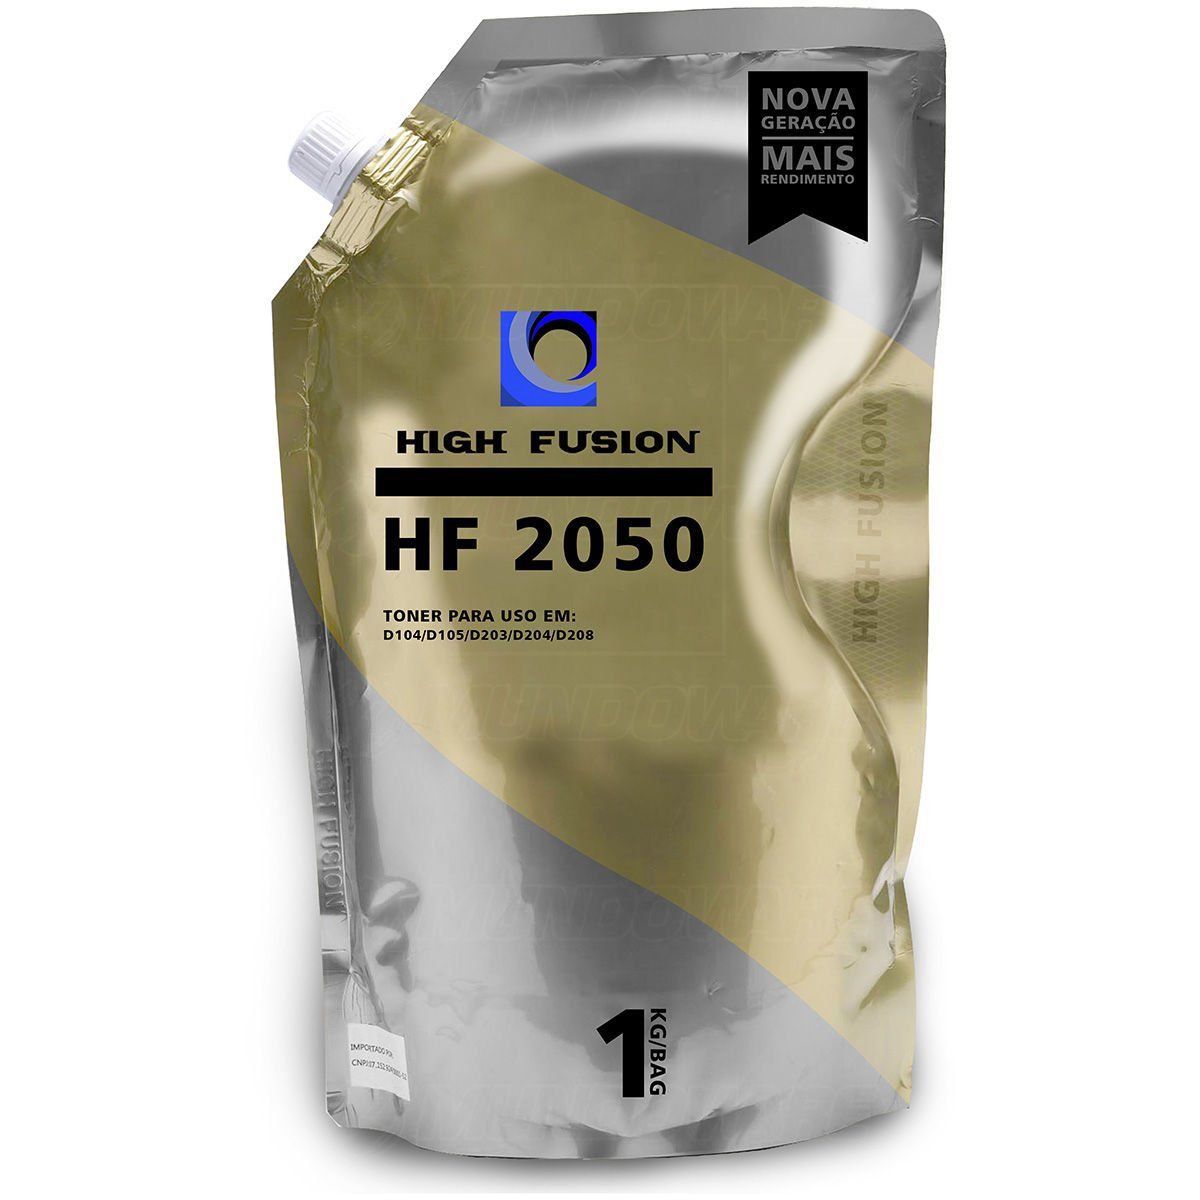 PO HIGH FUSION SAMSUNG/LEXMARK HF 2050 - 1 KG BAG